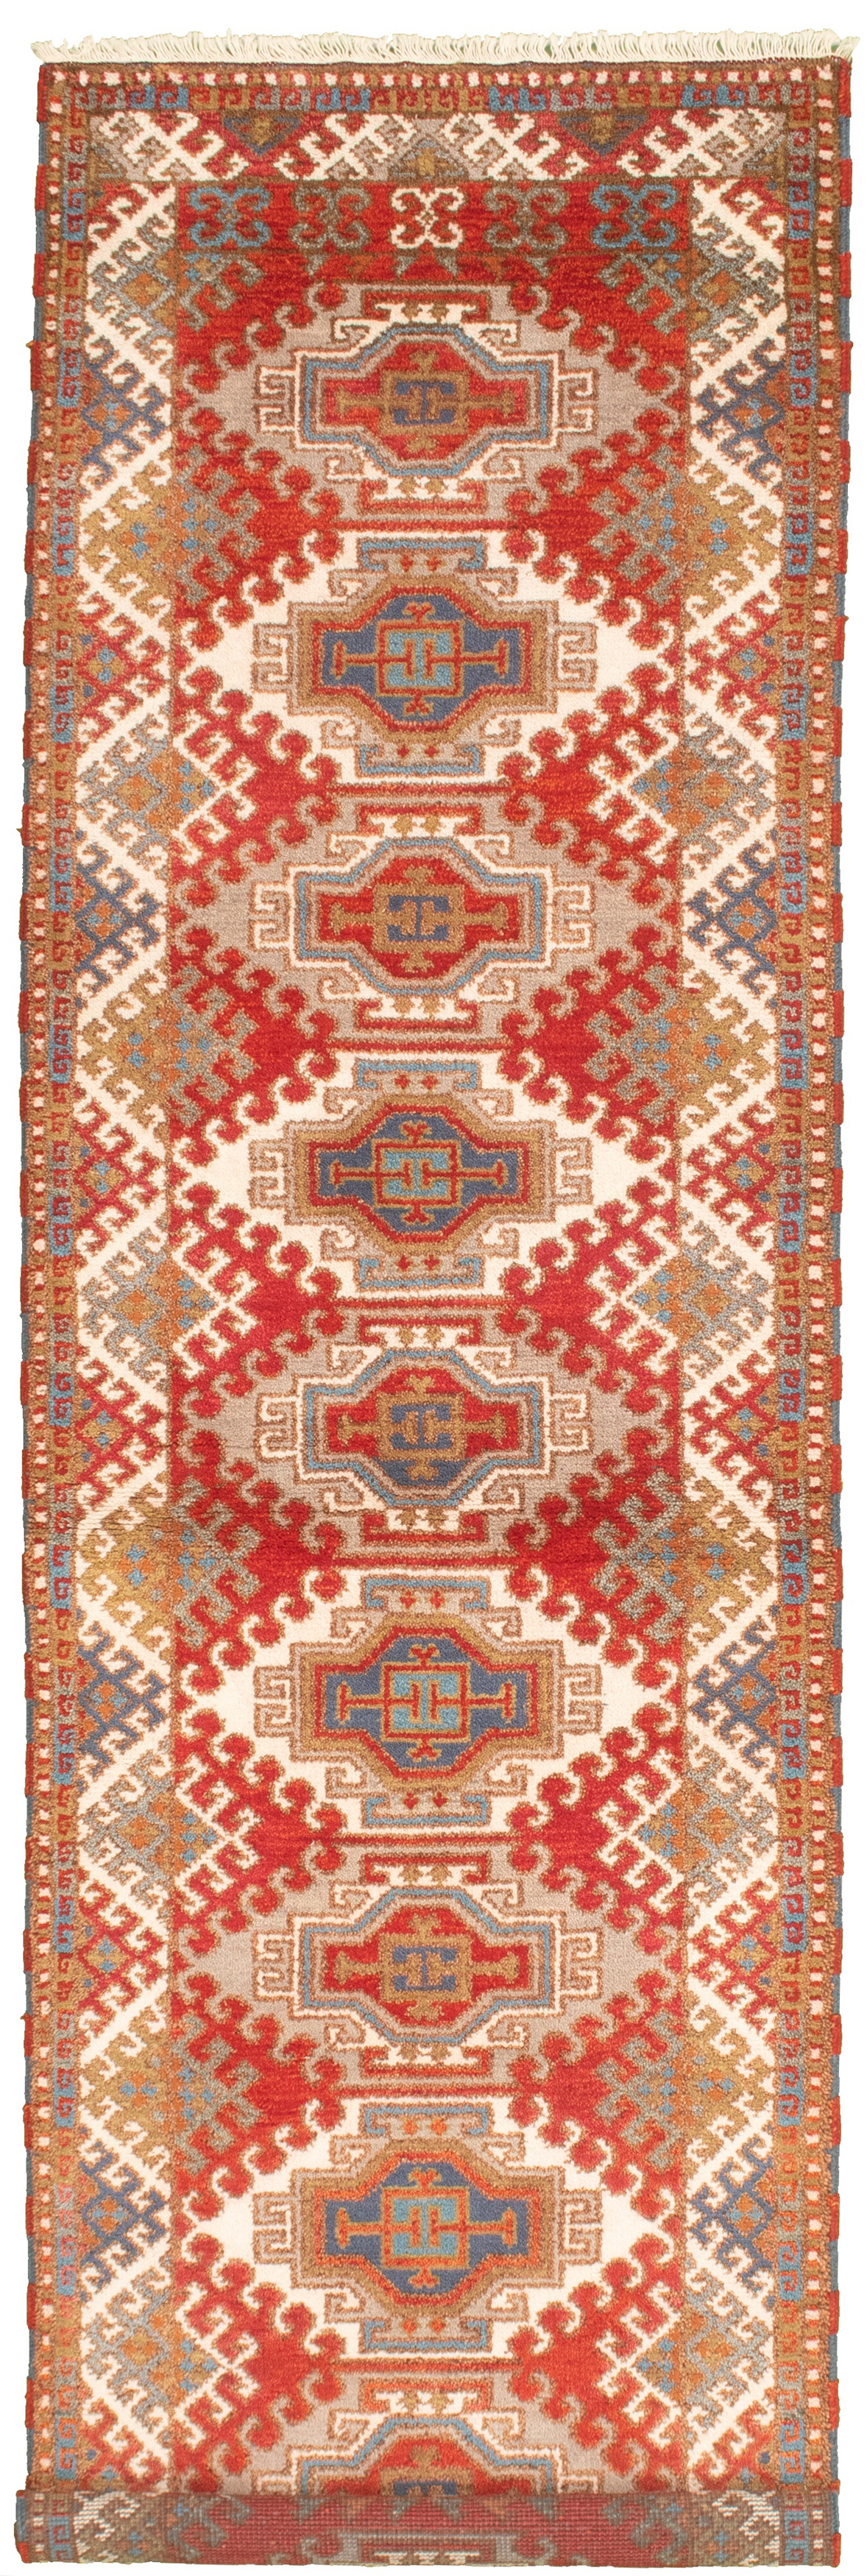 Hand-knotted Royal Kazak Dark Red Wool Rug 2'9" x 10'0"  Size: 2'9" x 10'0"  